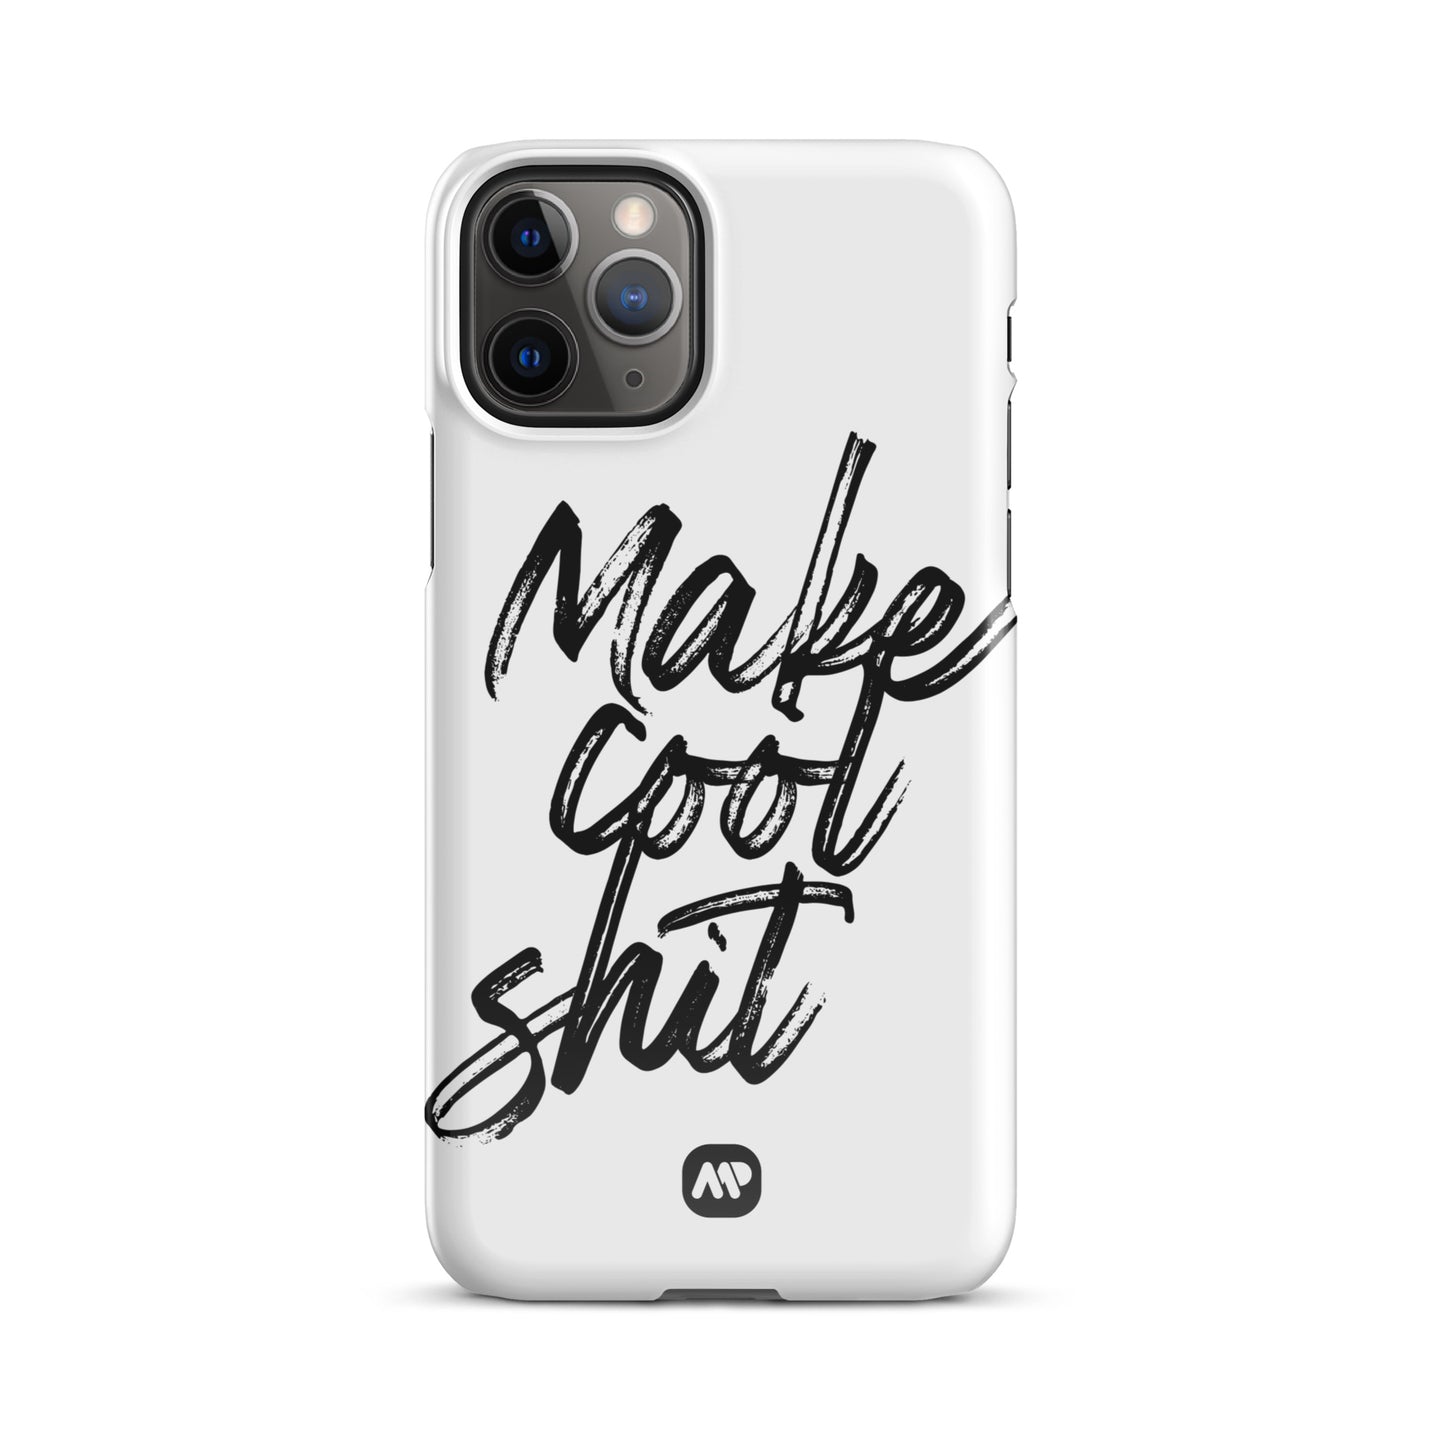 Make Cool Sh*t iPhone Case